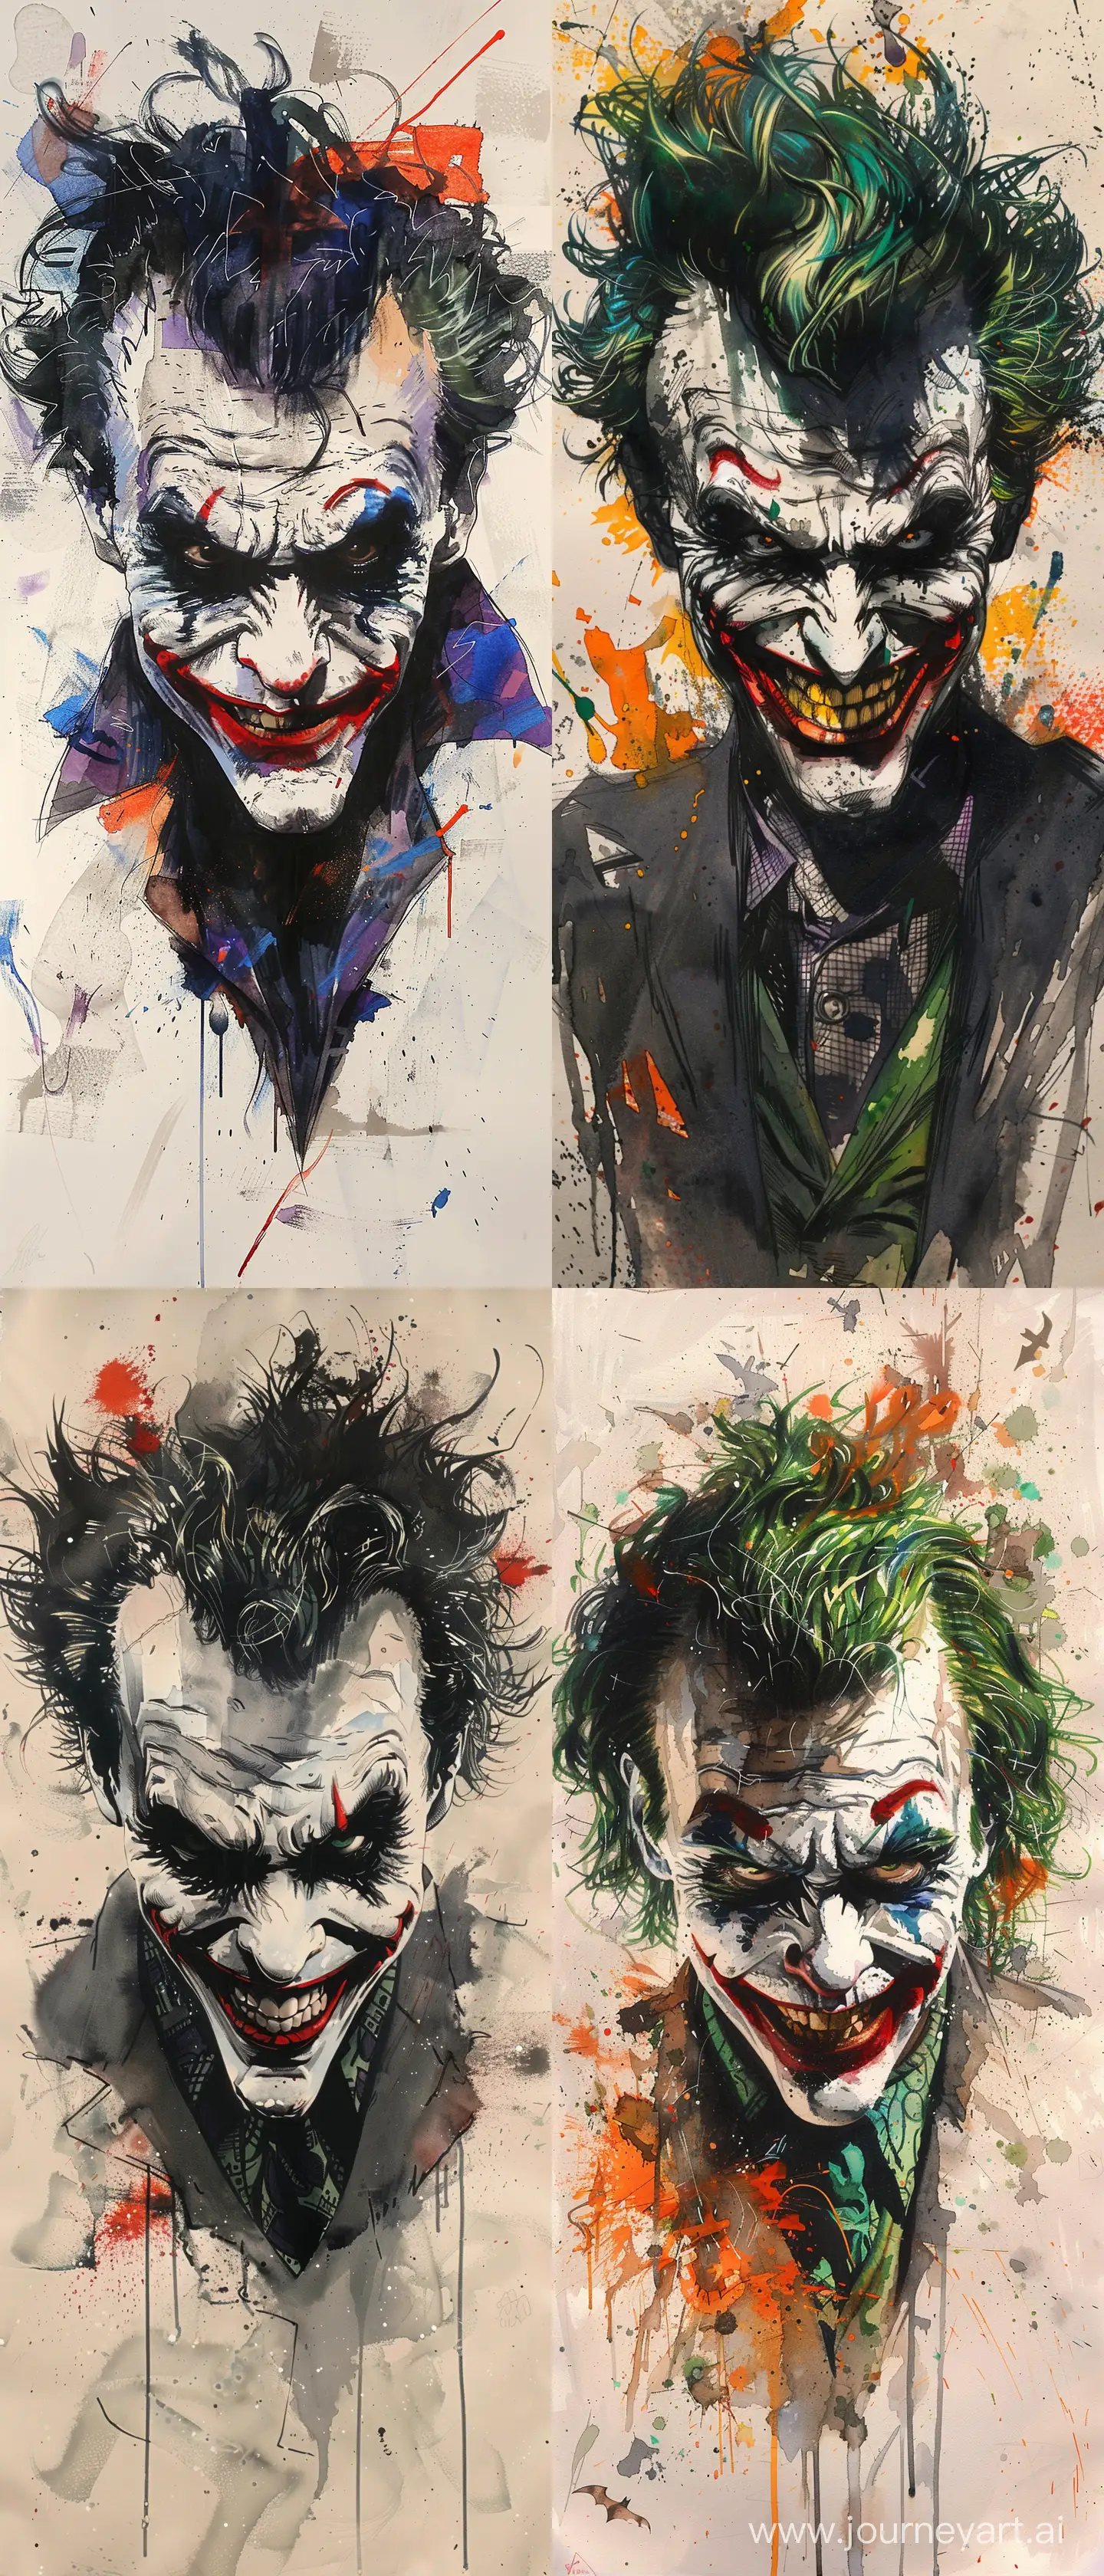 Surreal-Ink-Art-of-the-Joker-in-Batman-Abstract-Eastman-Colors